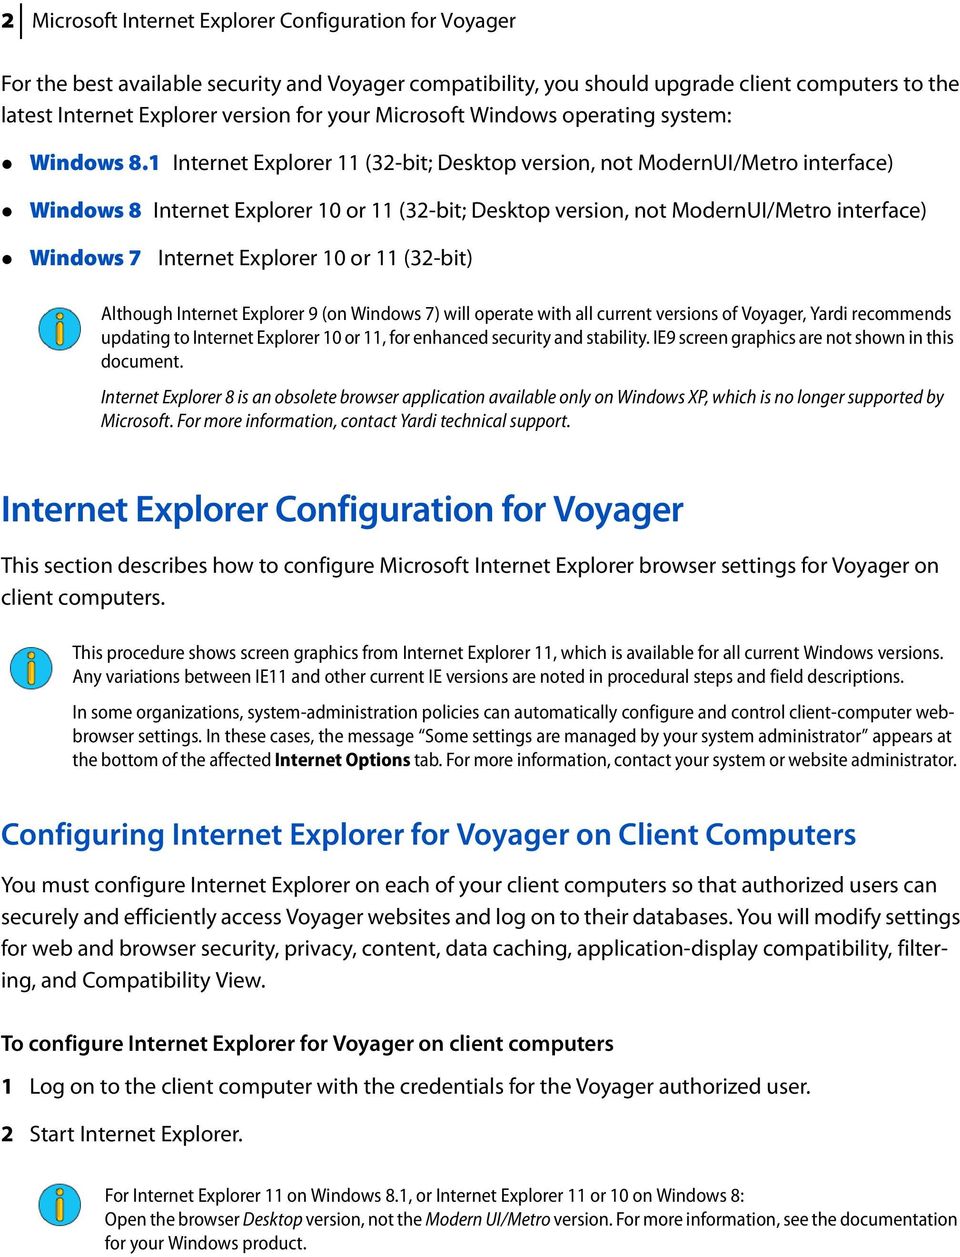 internet explorer 11 for windows xp free download full version